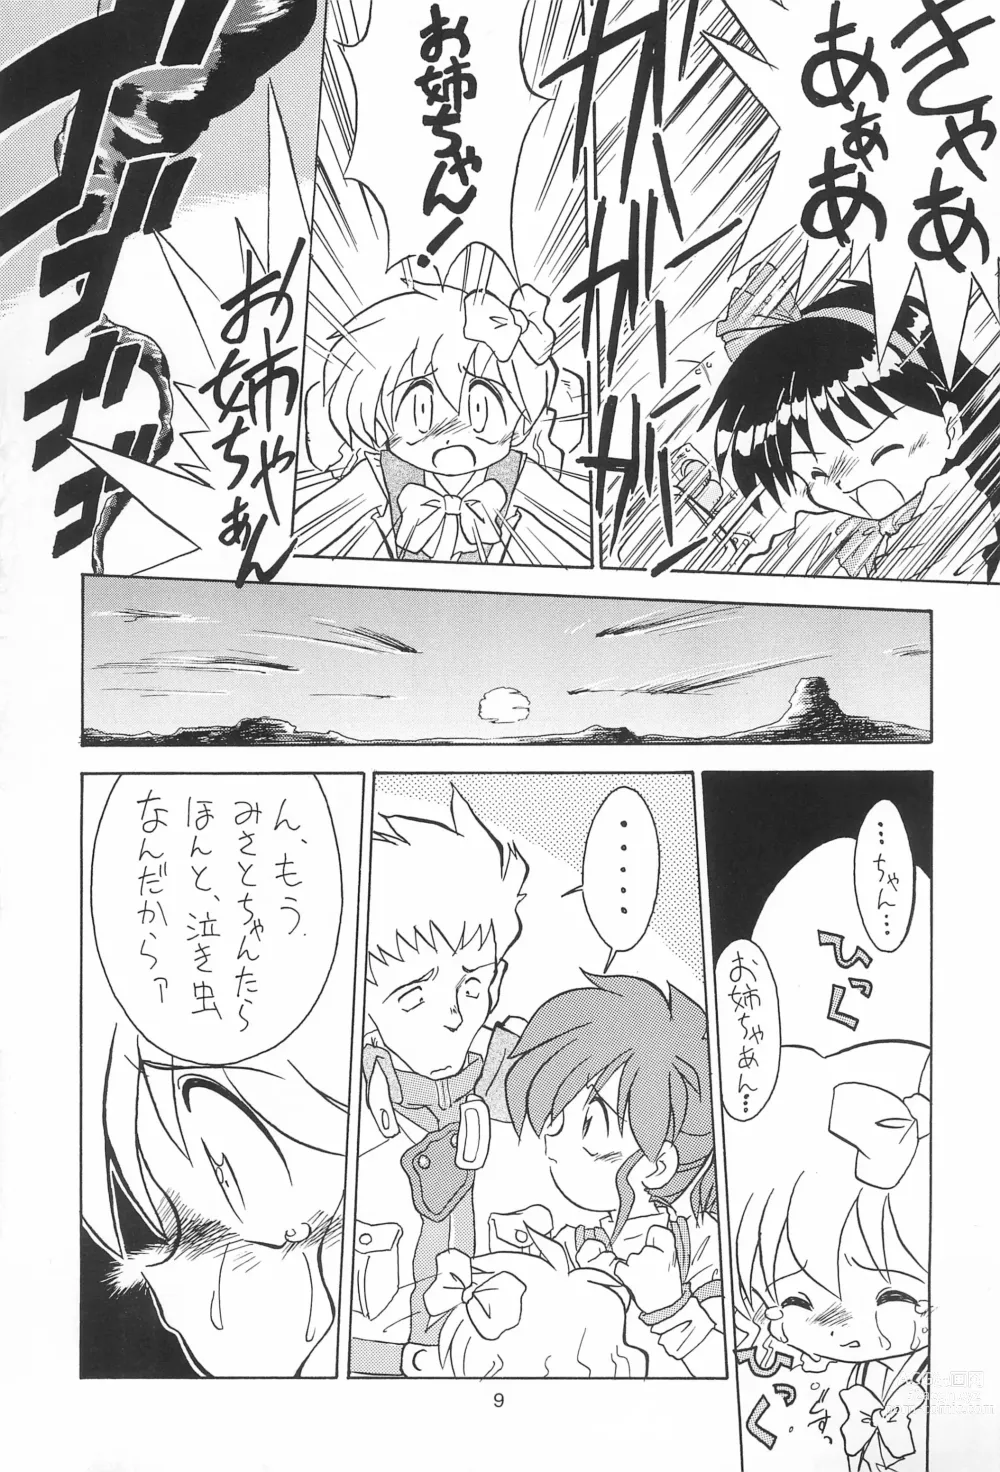 Page 9 of doujinshi Yonemaru Archive